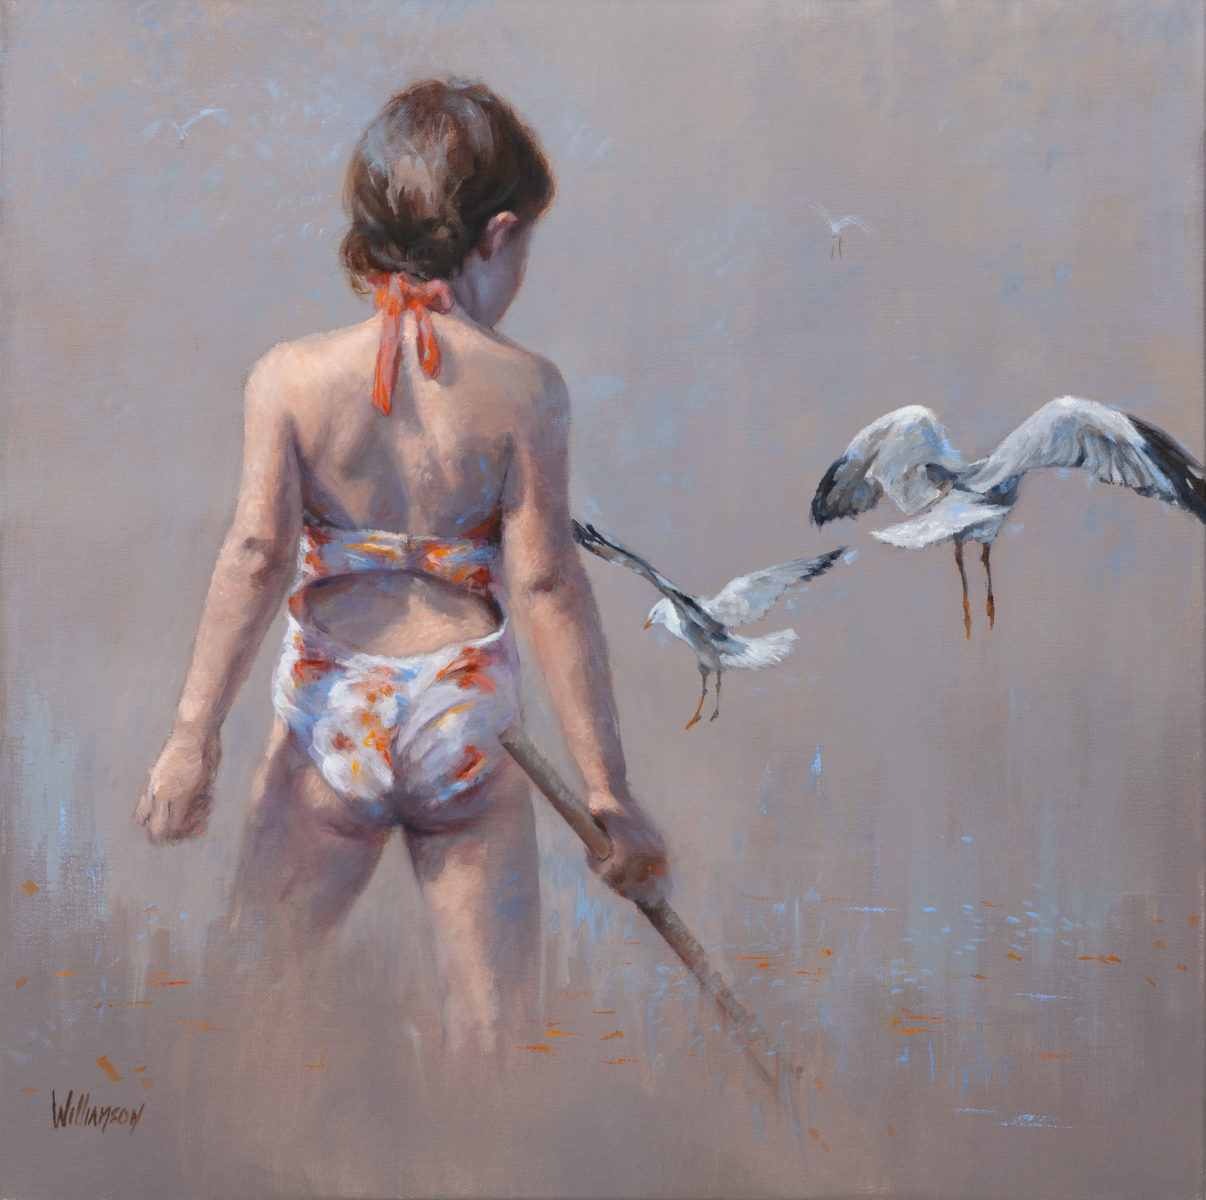 Girl with Seagulls | Jan Williamson | Oil on canvas | 61 x 61 cm | $5,900